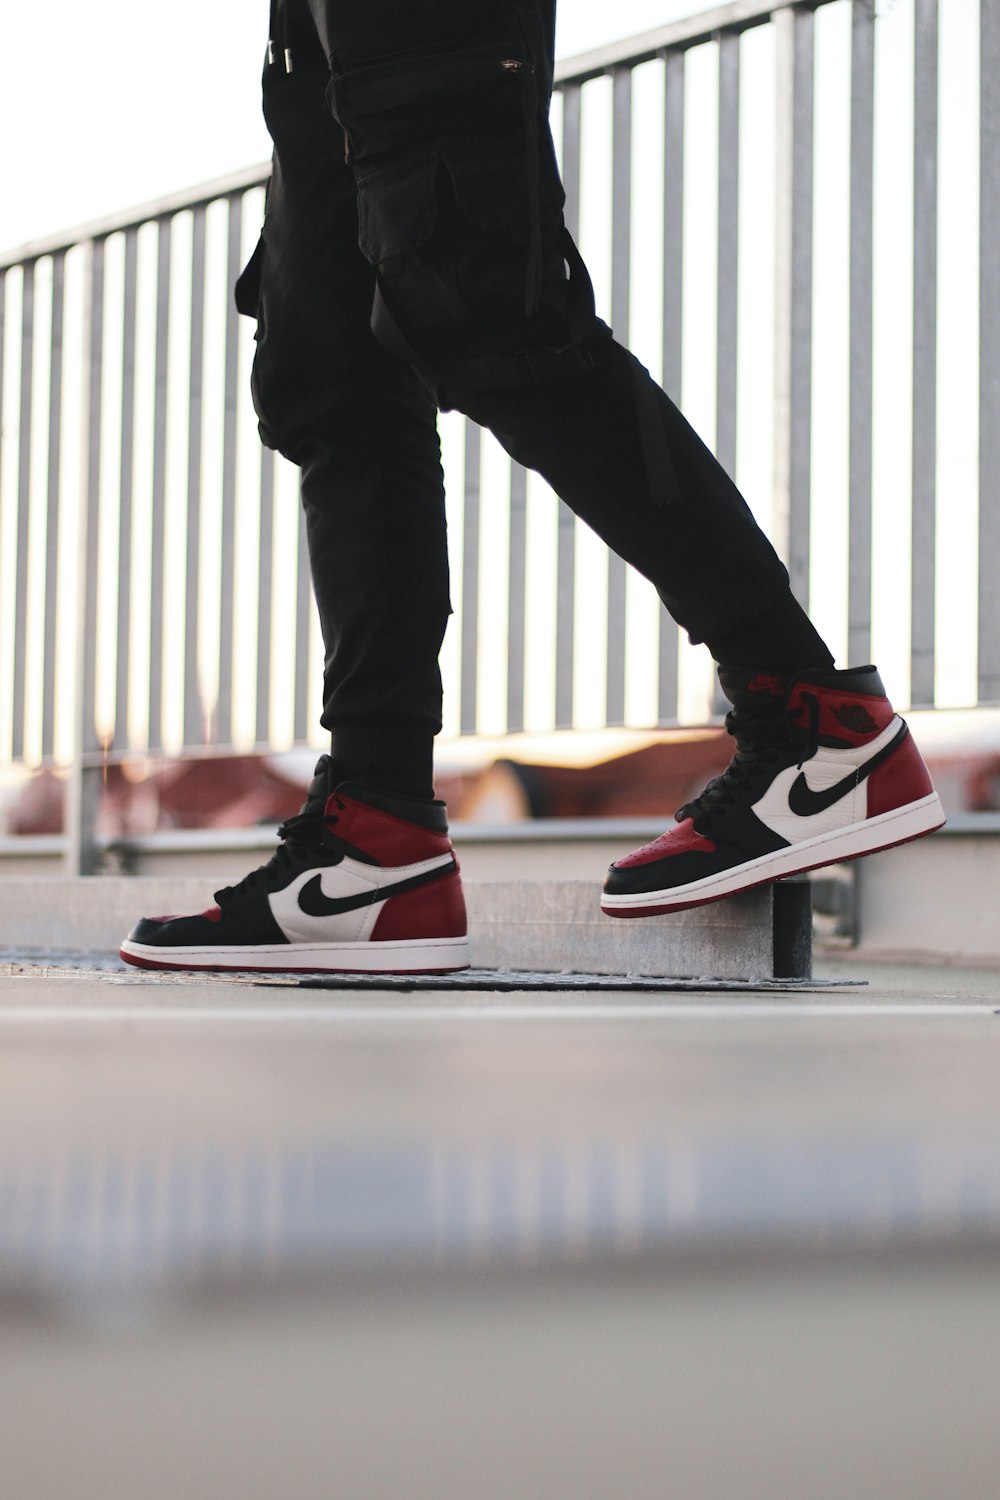 Persona in pantaloni neri e scarpe da ginnastica Nike rosse e bianche